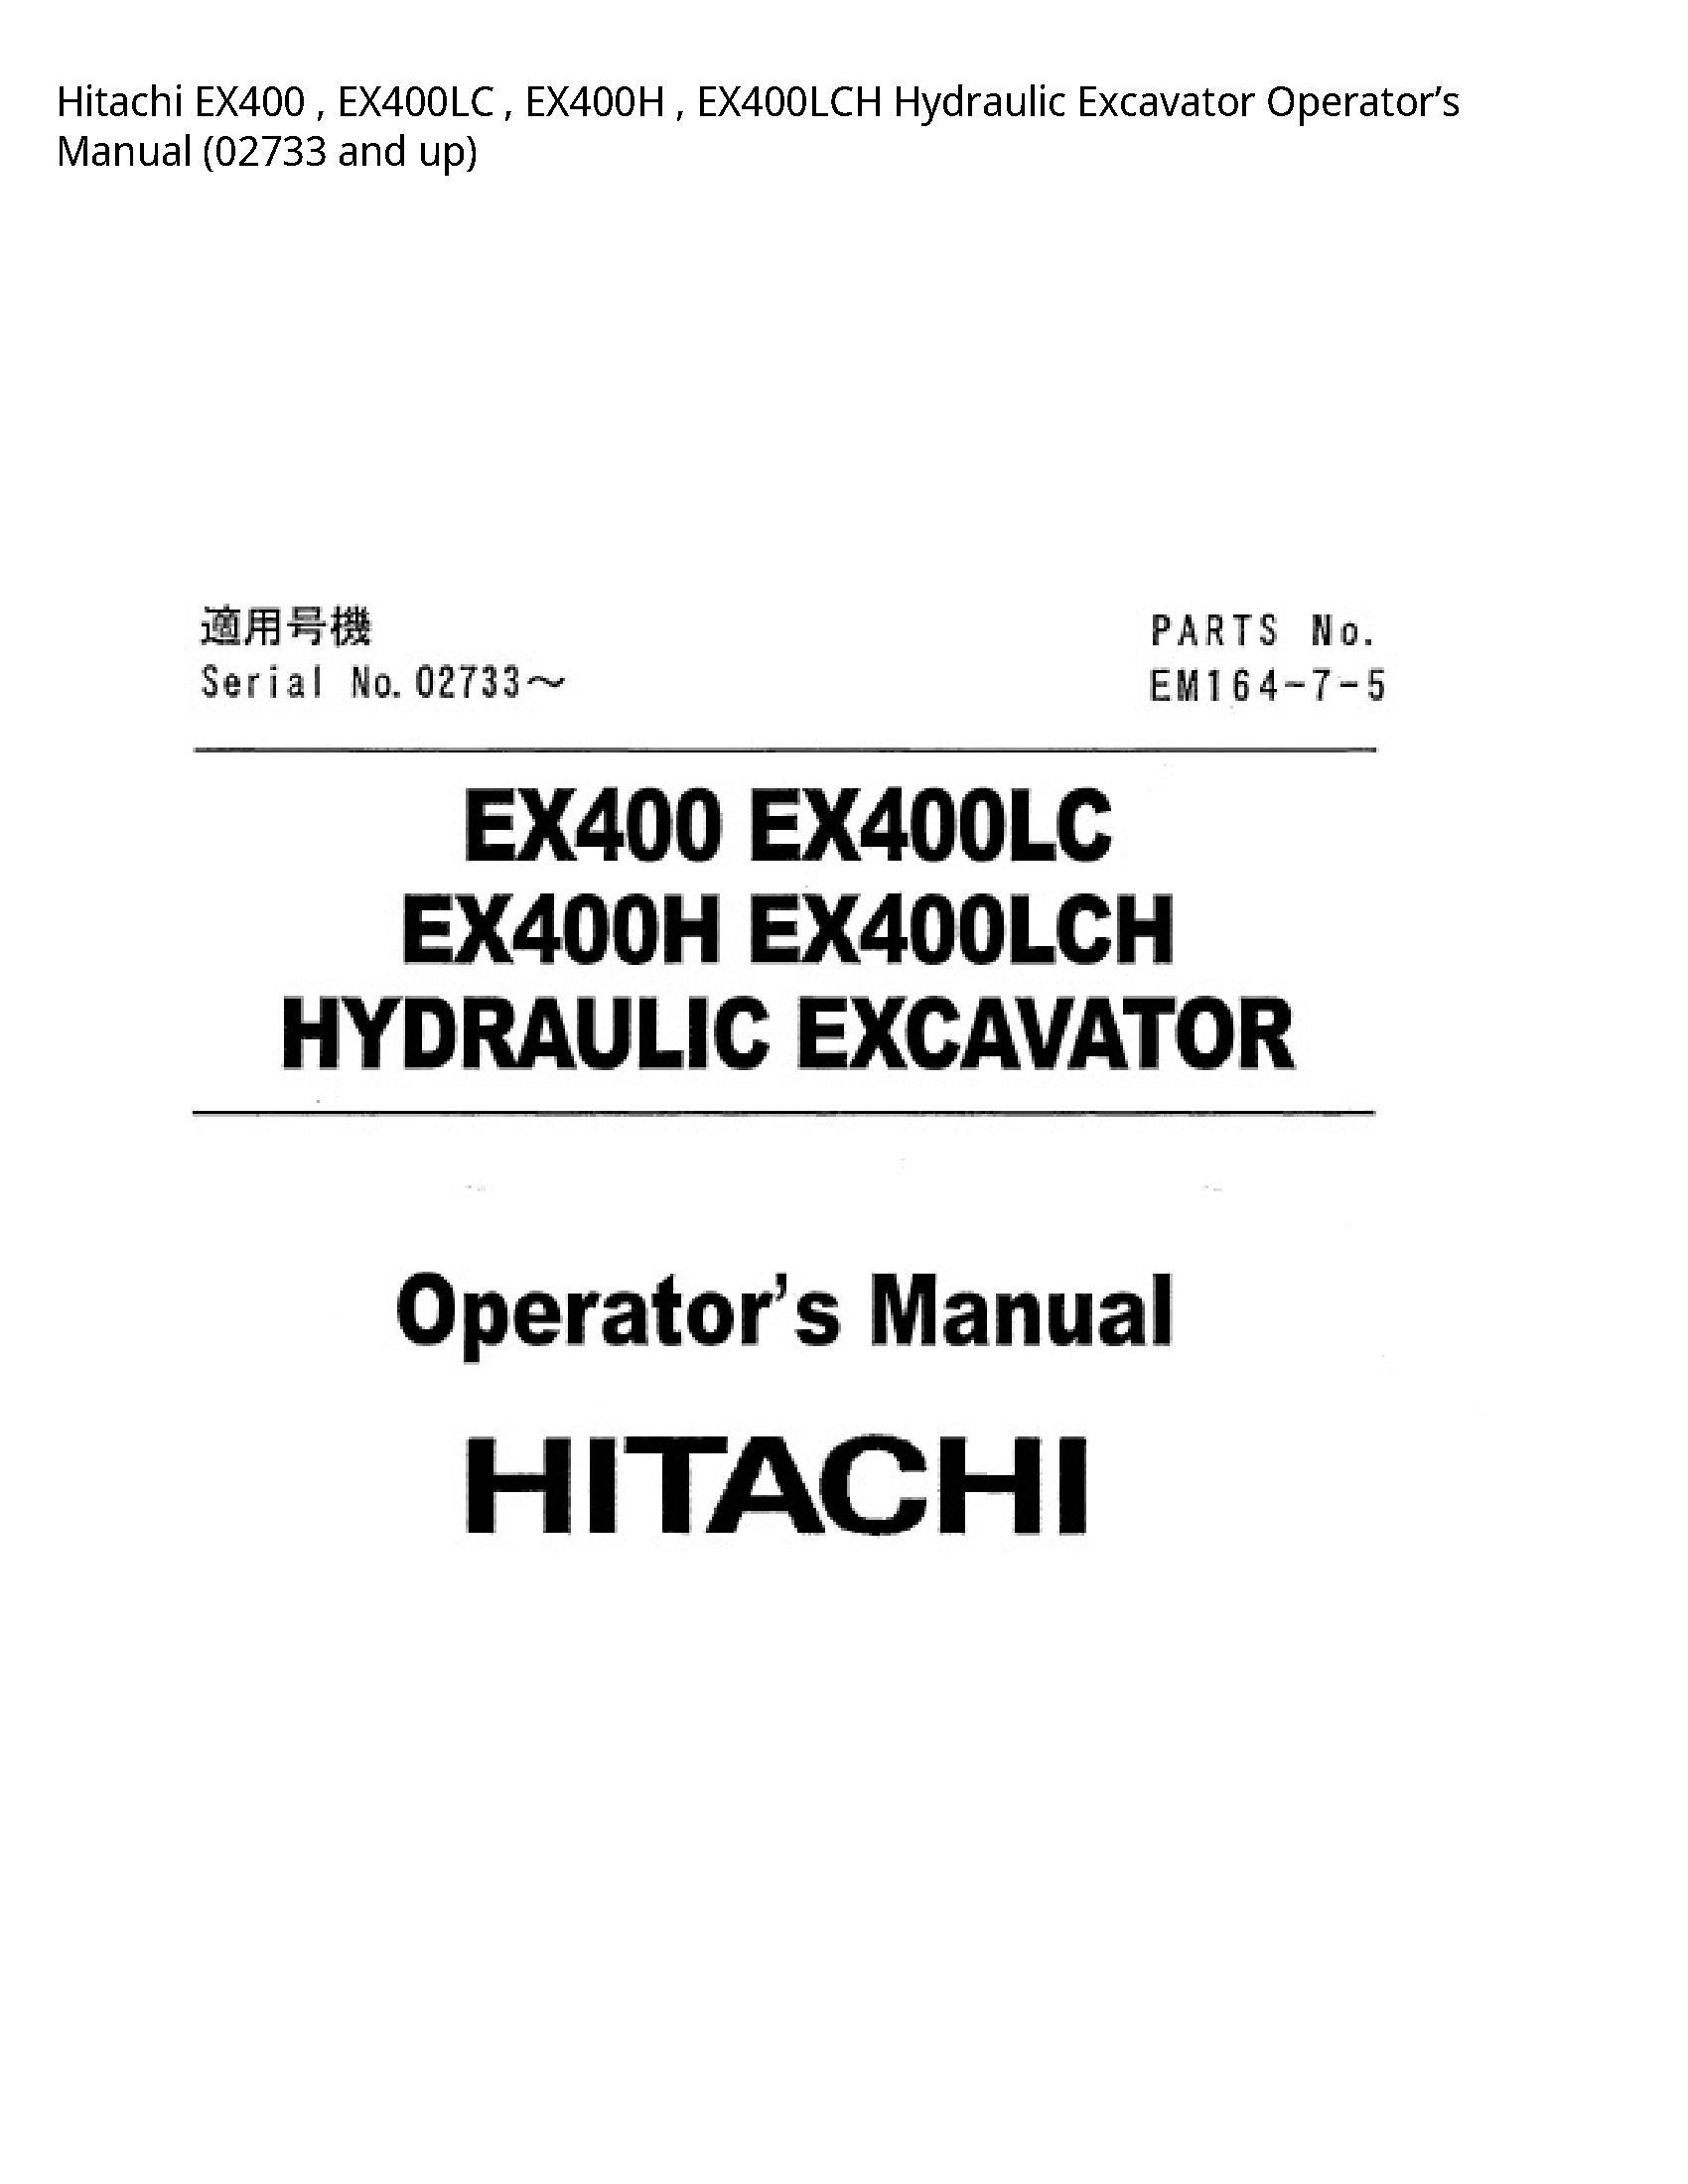 Hitachi EX400 Hydraulic Excavator Operator’s manual